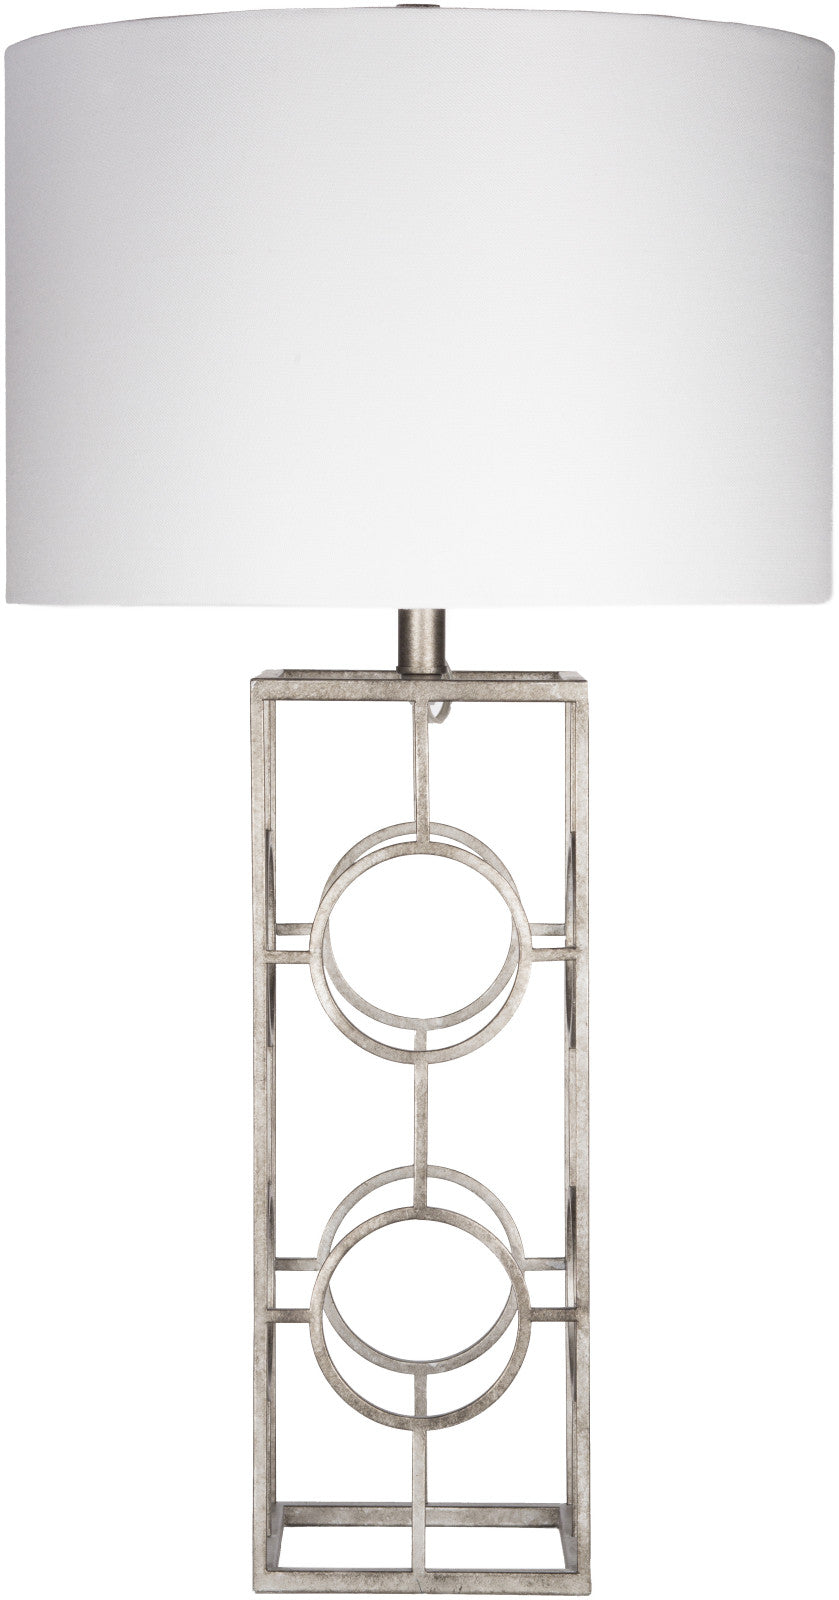 Surya Isaac IALP-001 White Lamp Table Lamp